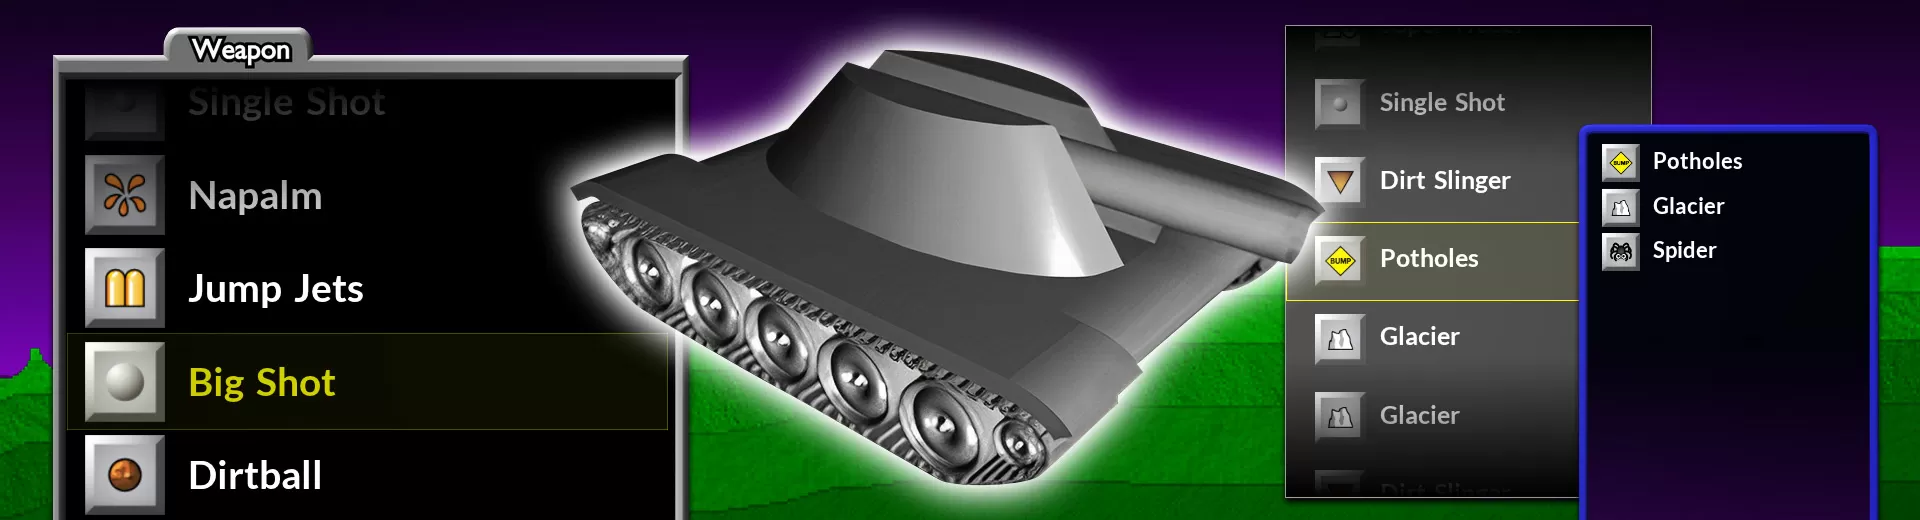 Pocket Tanks Emulator Pc